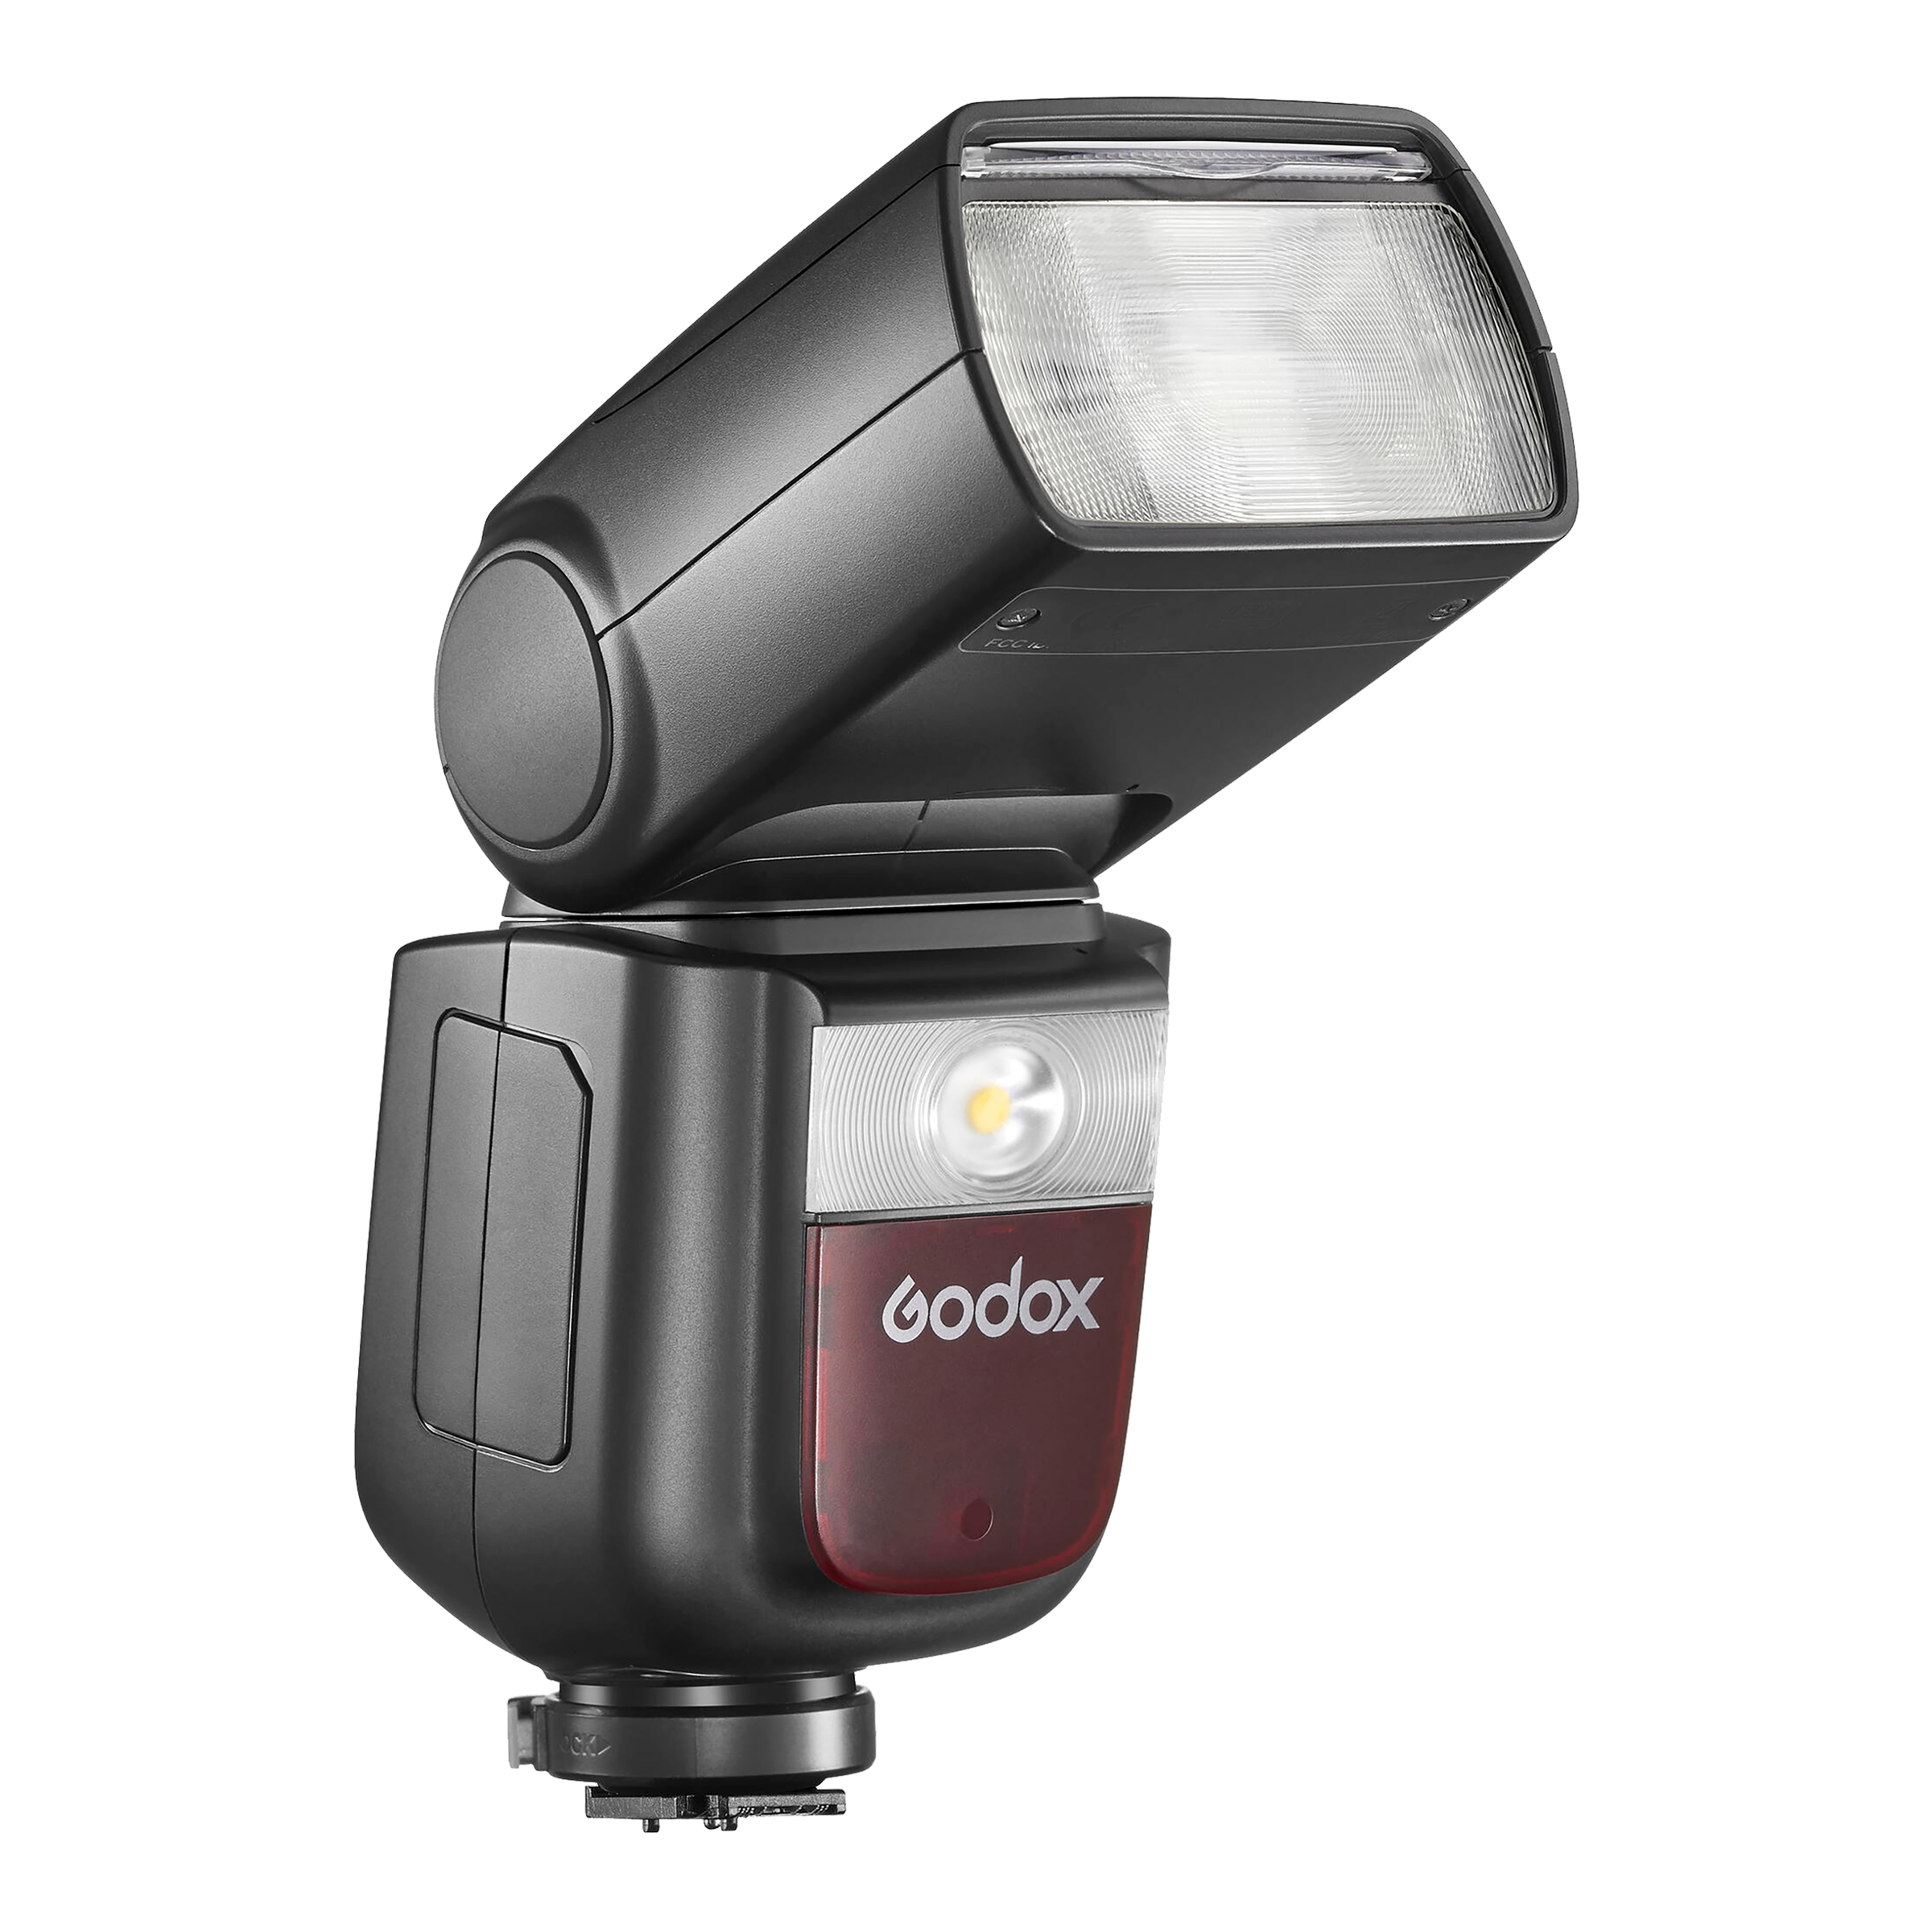 Godox V860IIIS Kit Camera Flash for Sony (TTL Functions Support)